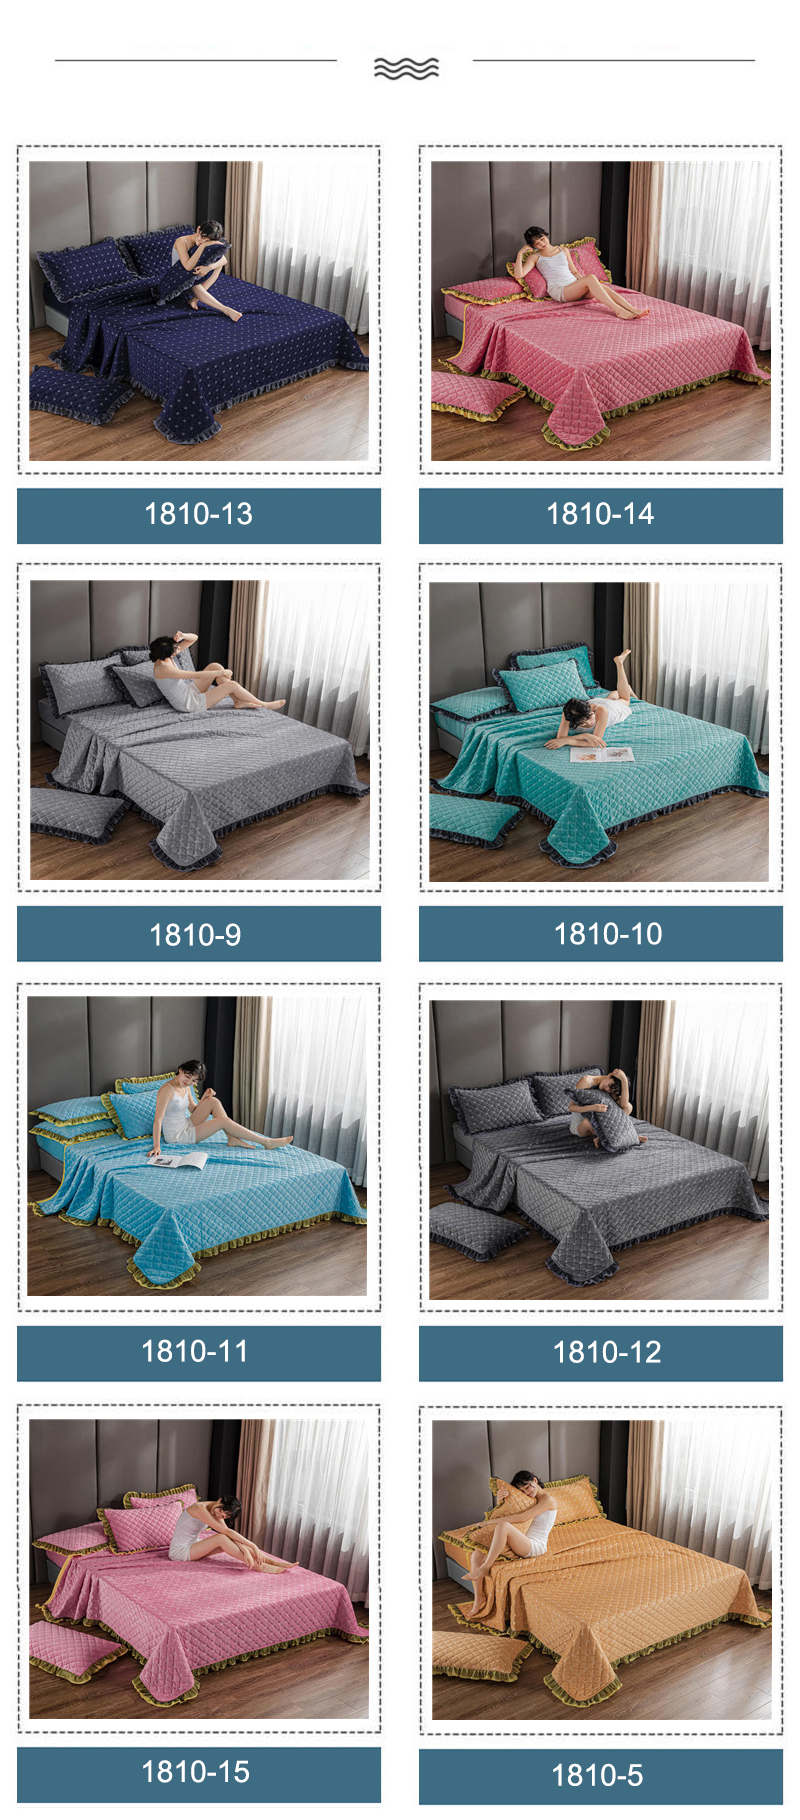 Home Textile Bedspread Luxury